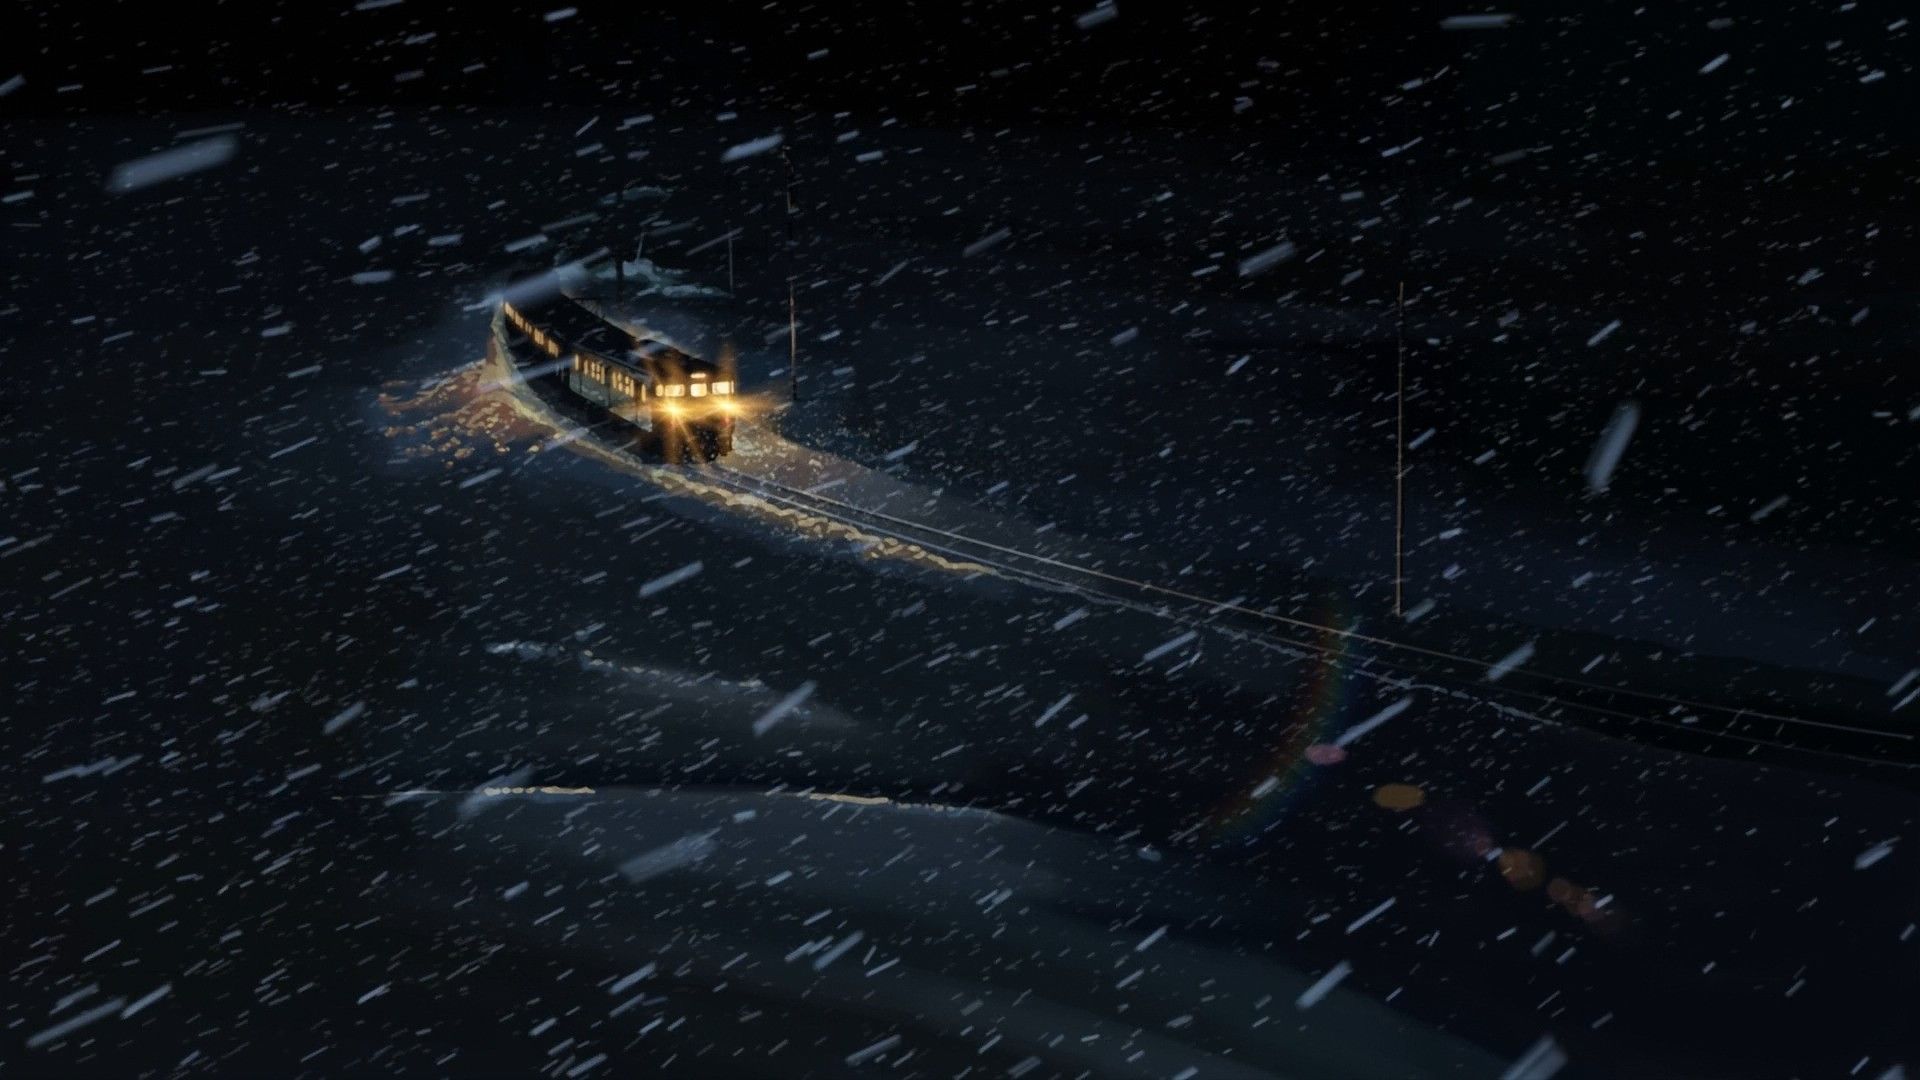 anime 5 centimeters per second winter snow train lights night wallpaper JPG 260 kB. Anime. Tokkoro.com Amazing HD Wallpaper